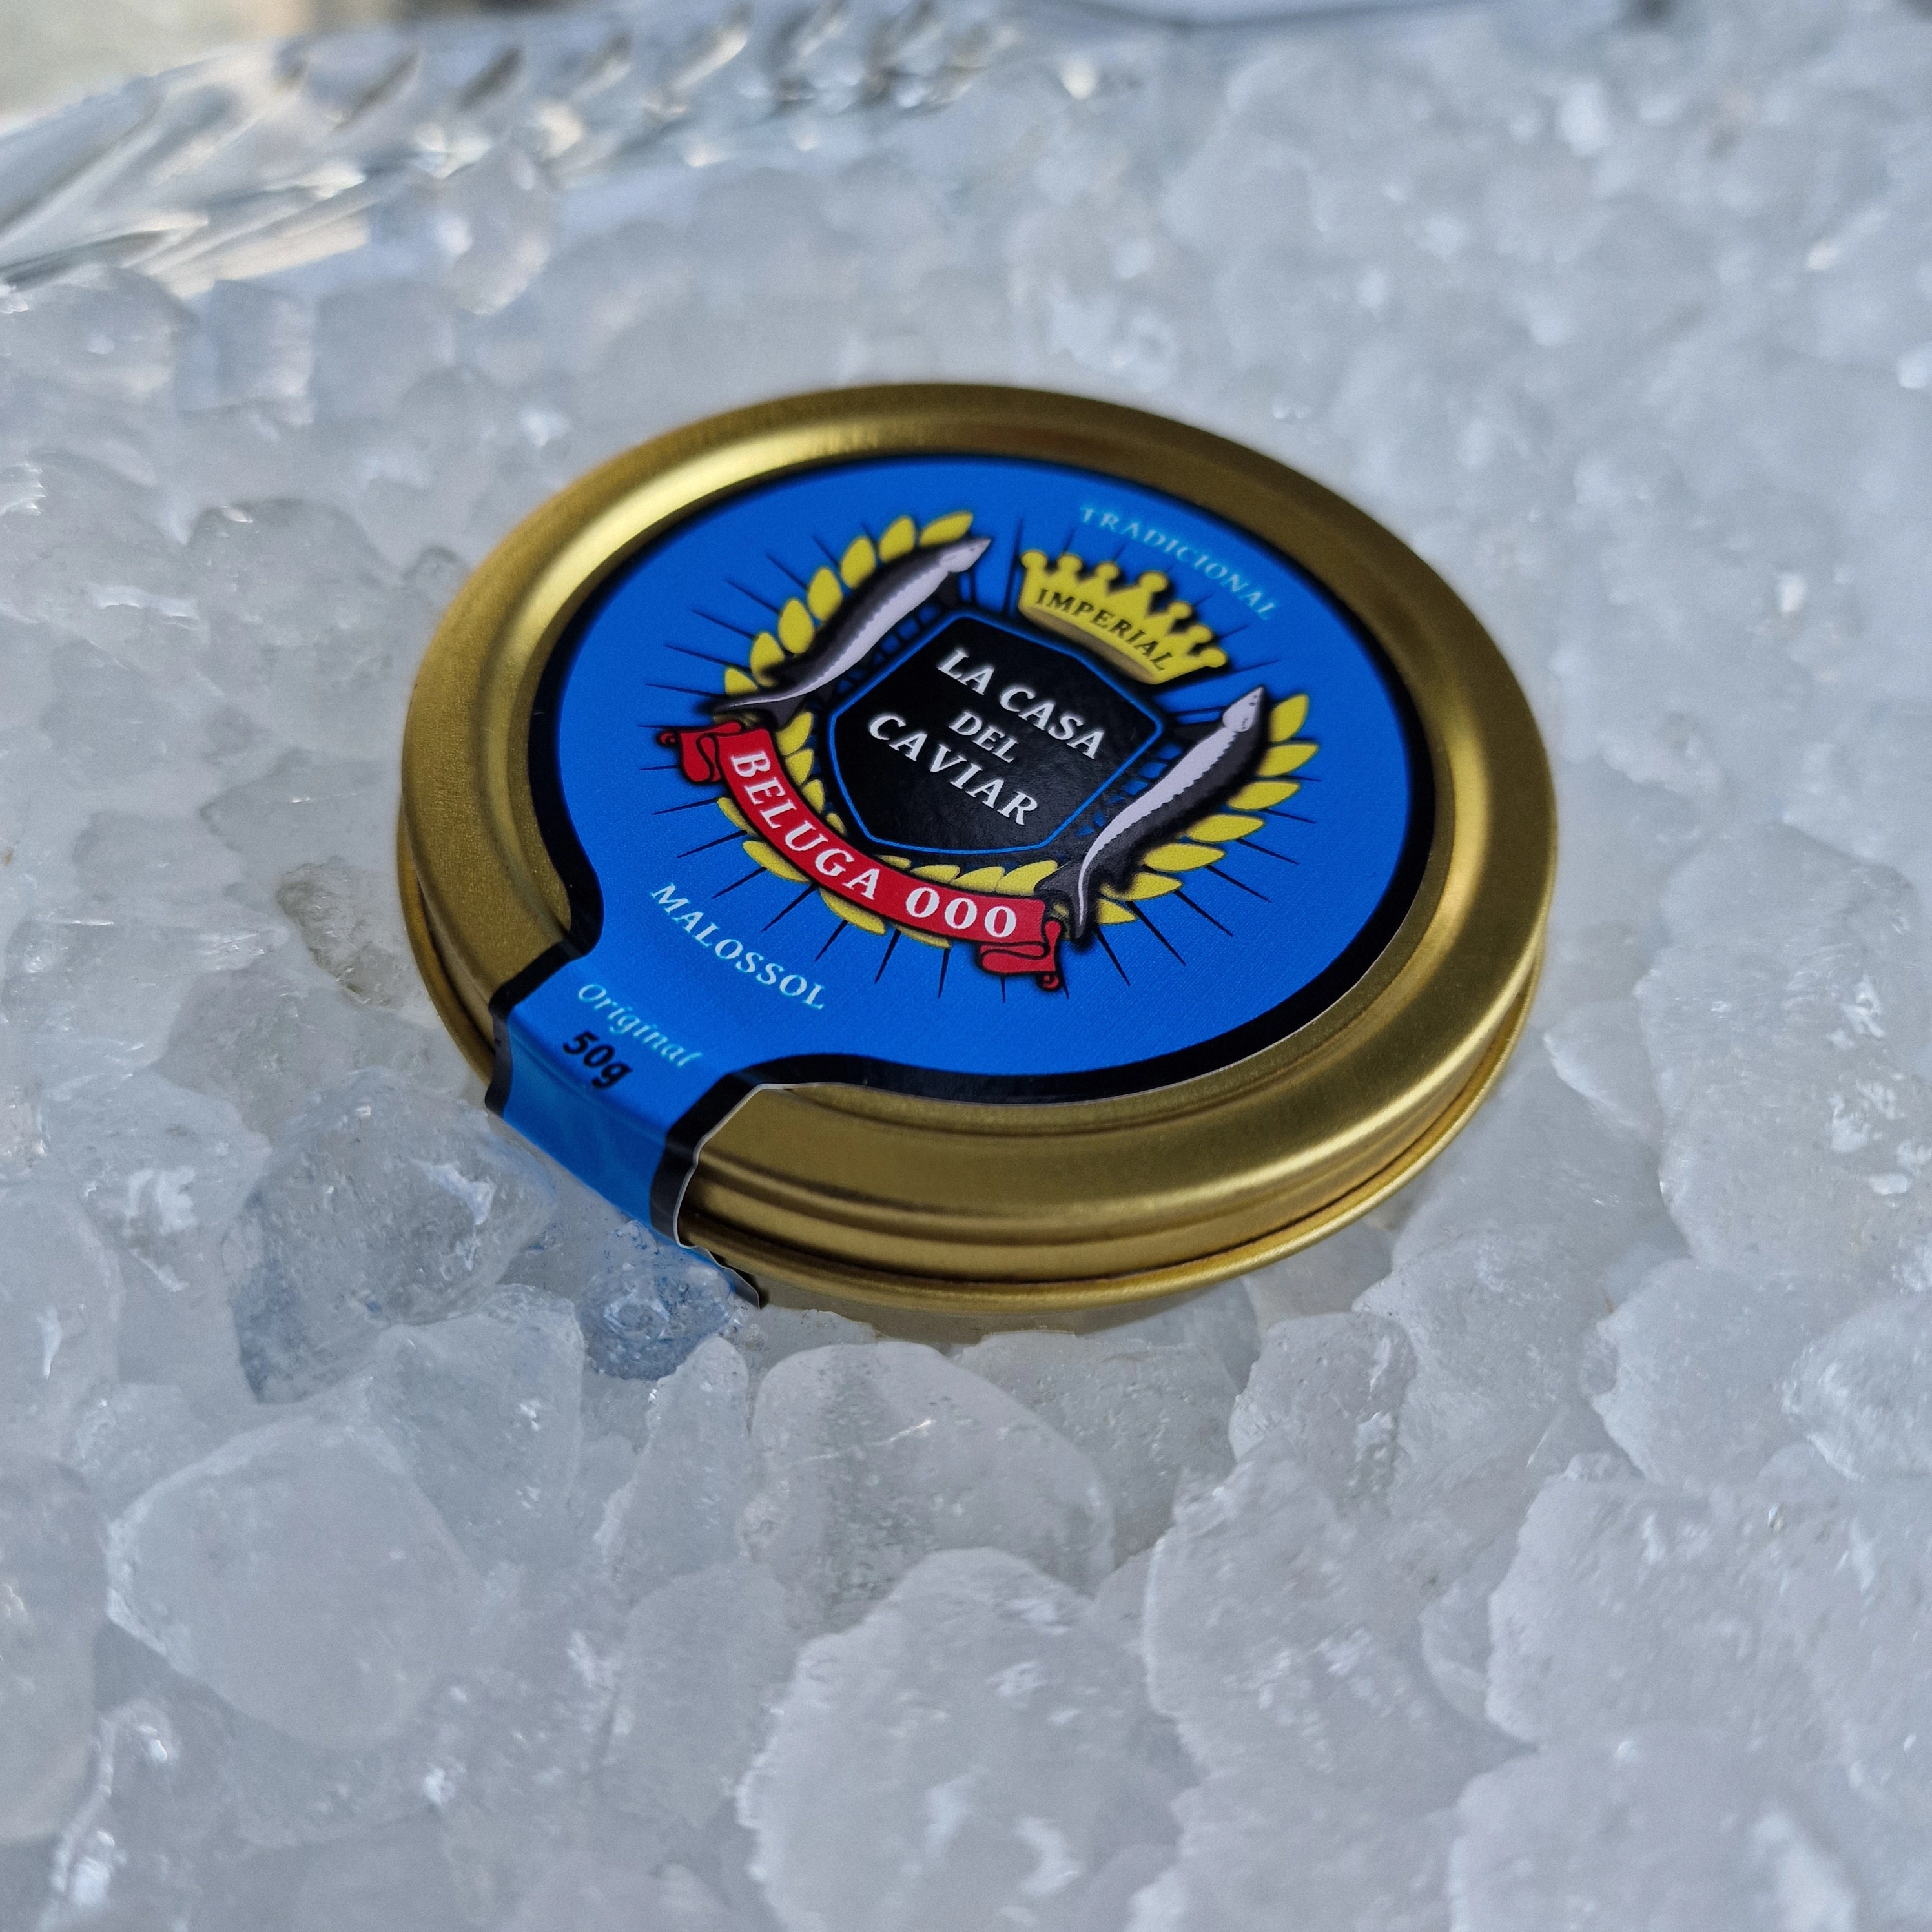 beluga caviar